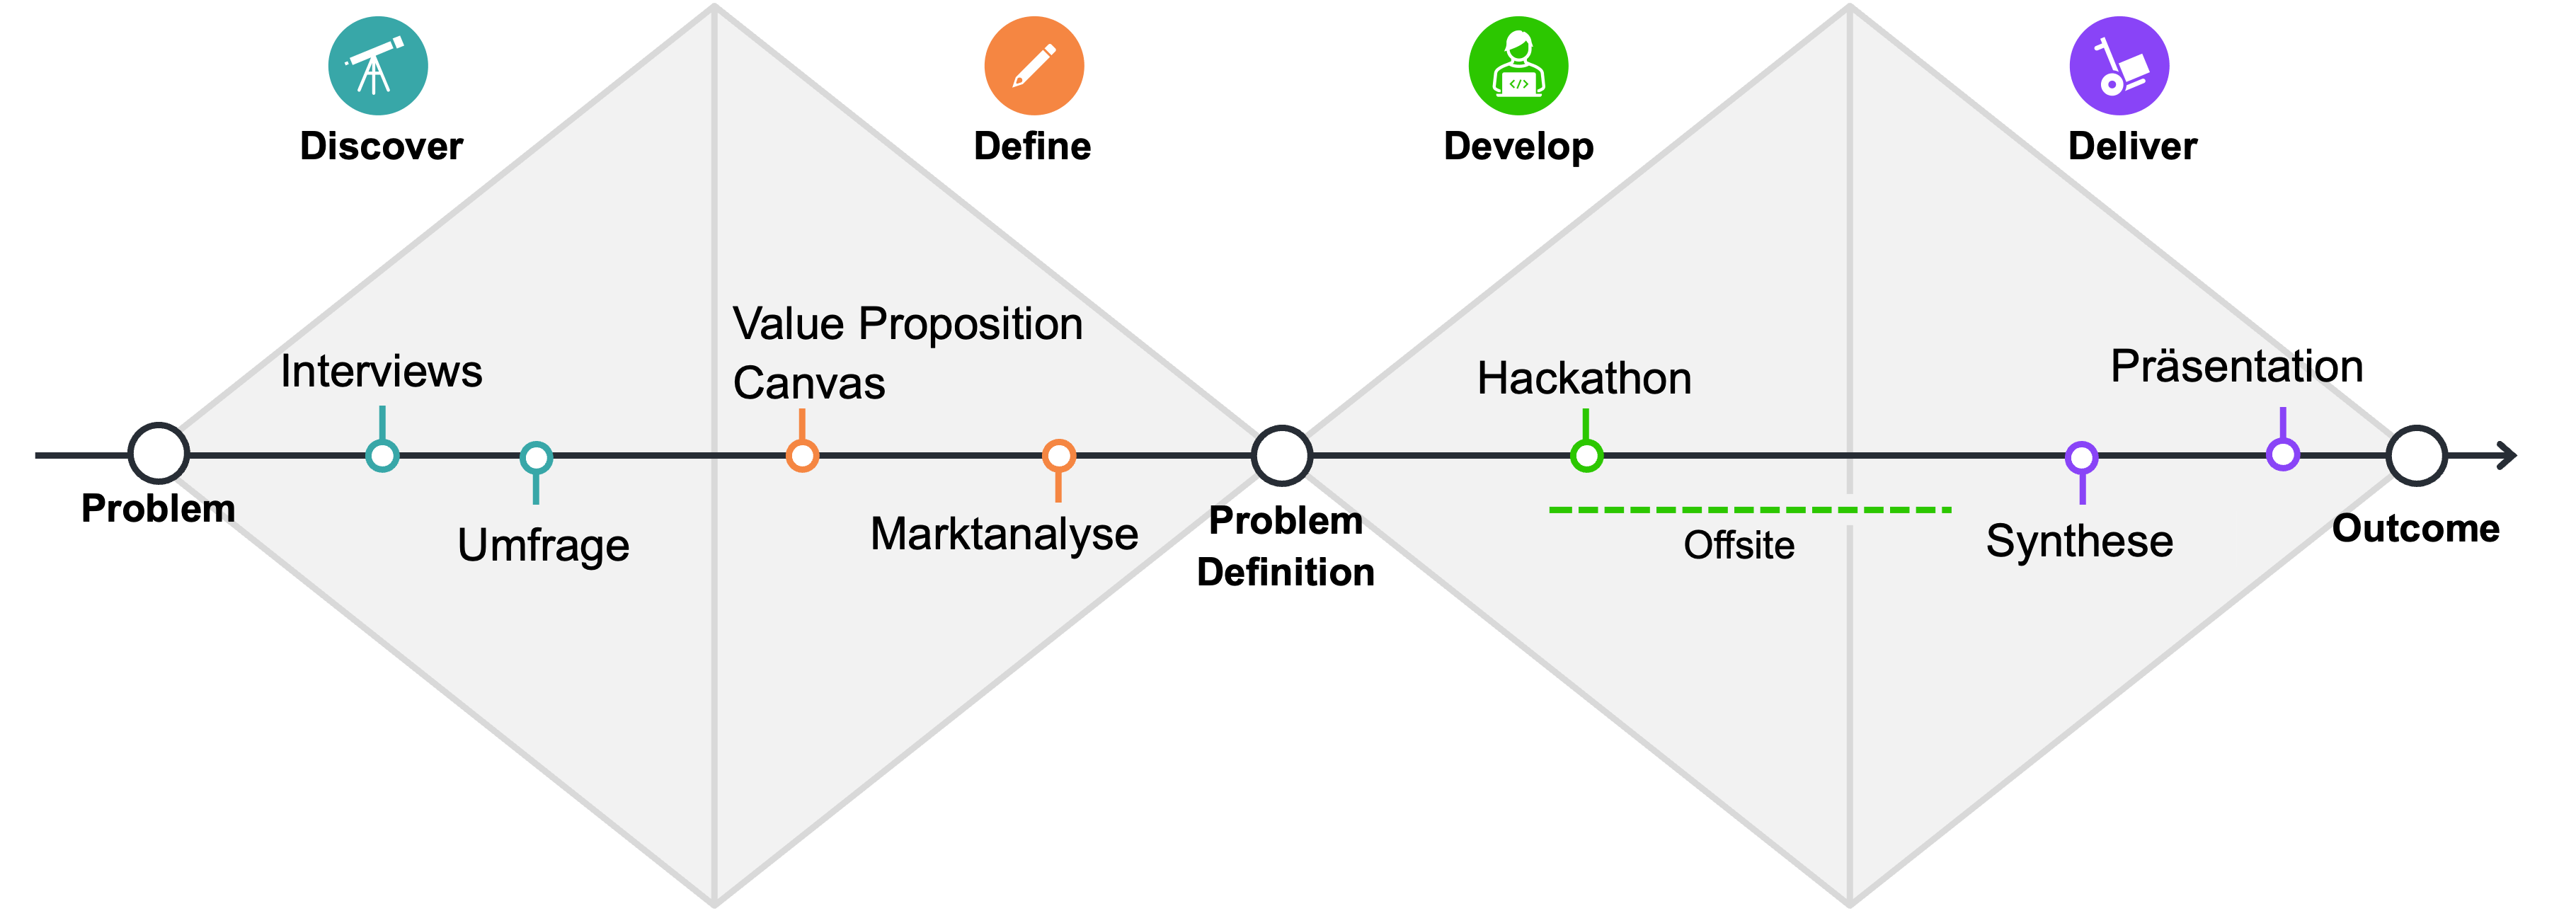 Data Innovation - Vorgehensmodell